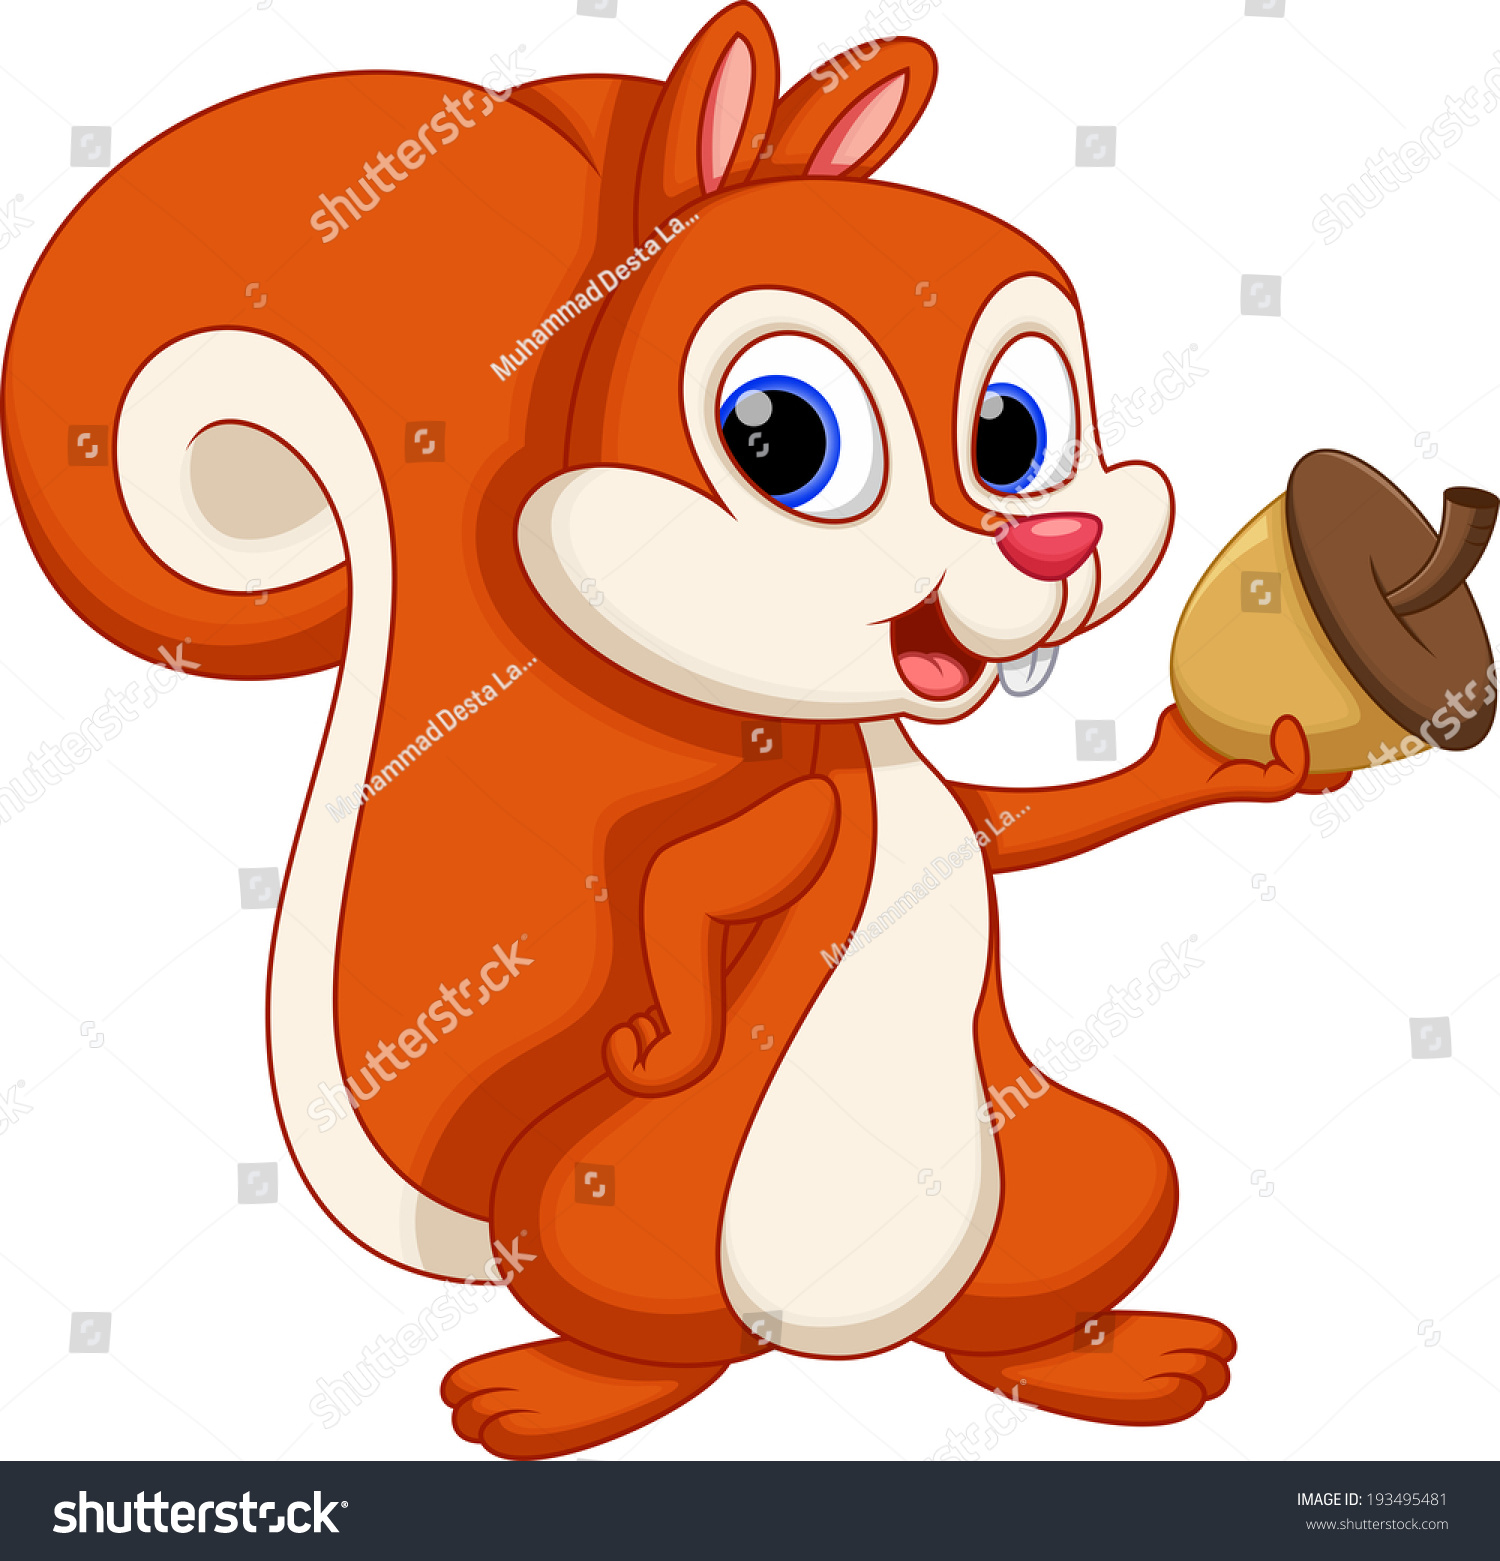 Cute Squirrel Cartoon Stock Vector 193495481 - Shutterstock